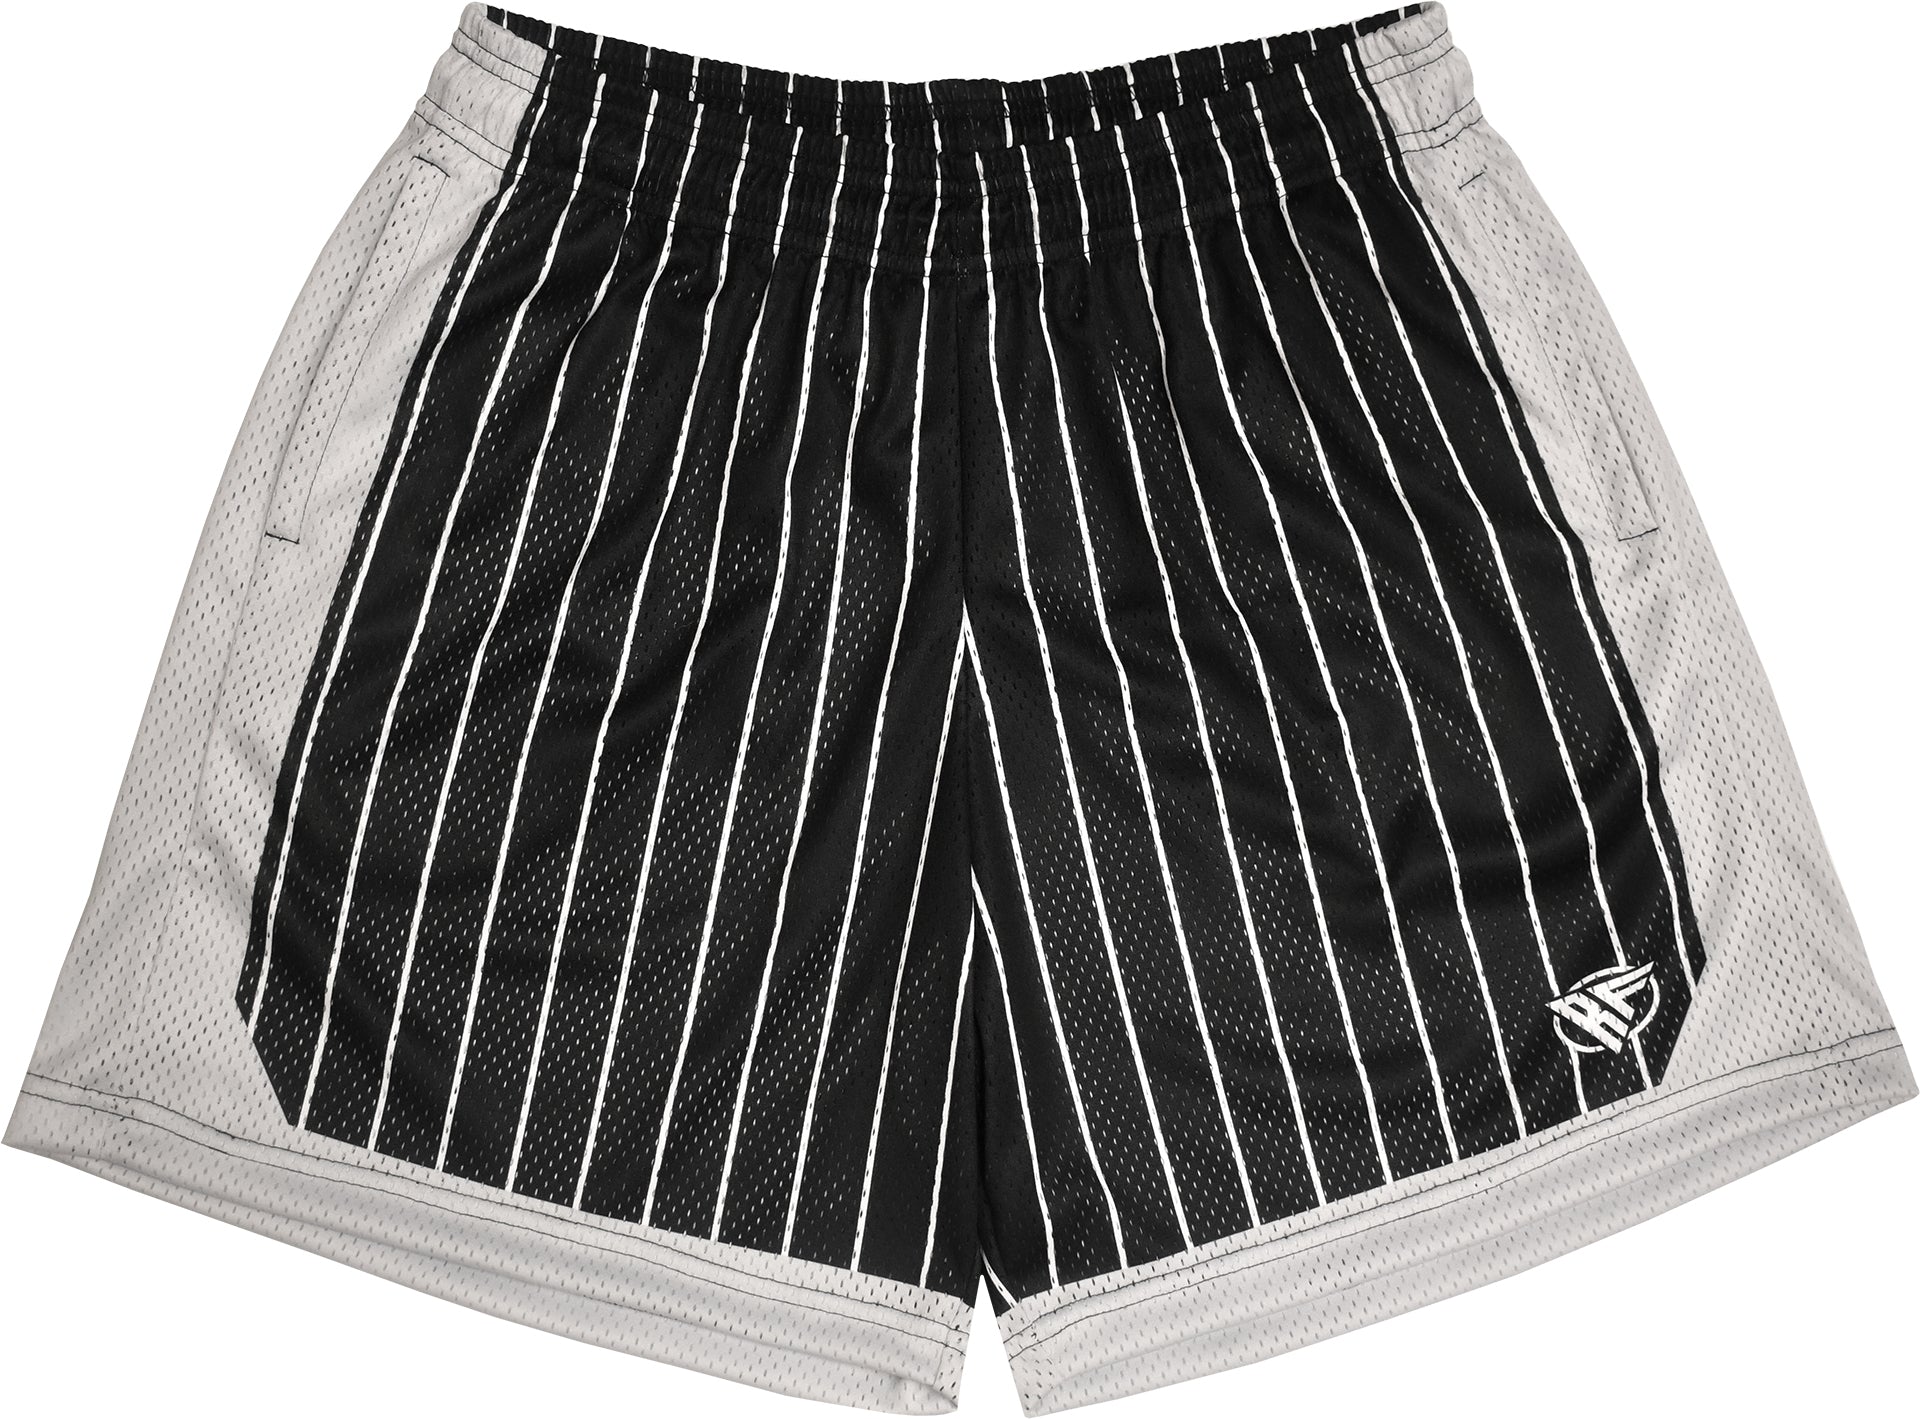 RF Mesh Pinstripe Basketball Shorts - Black